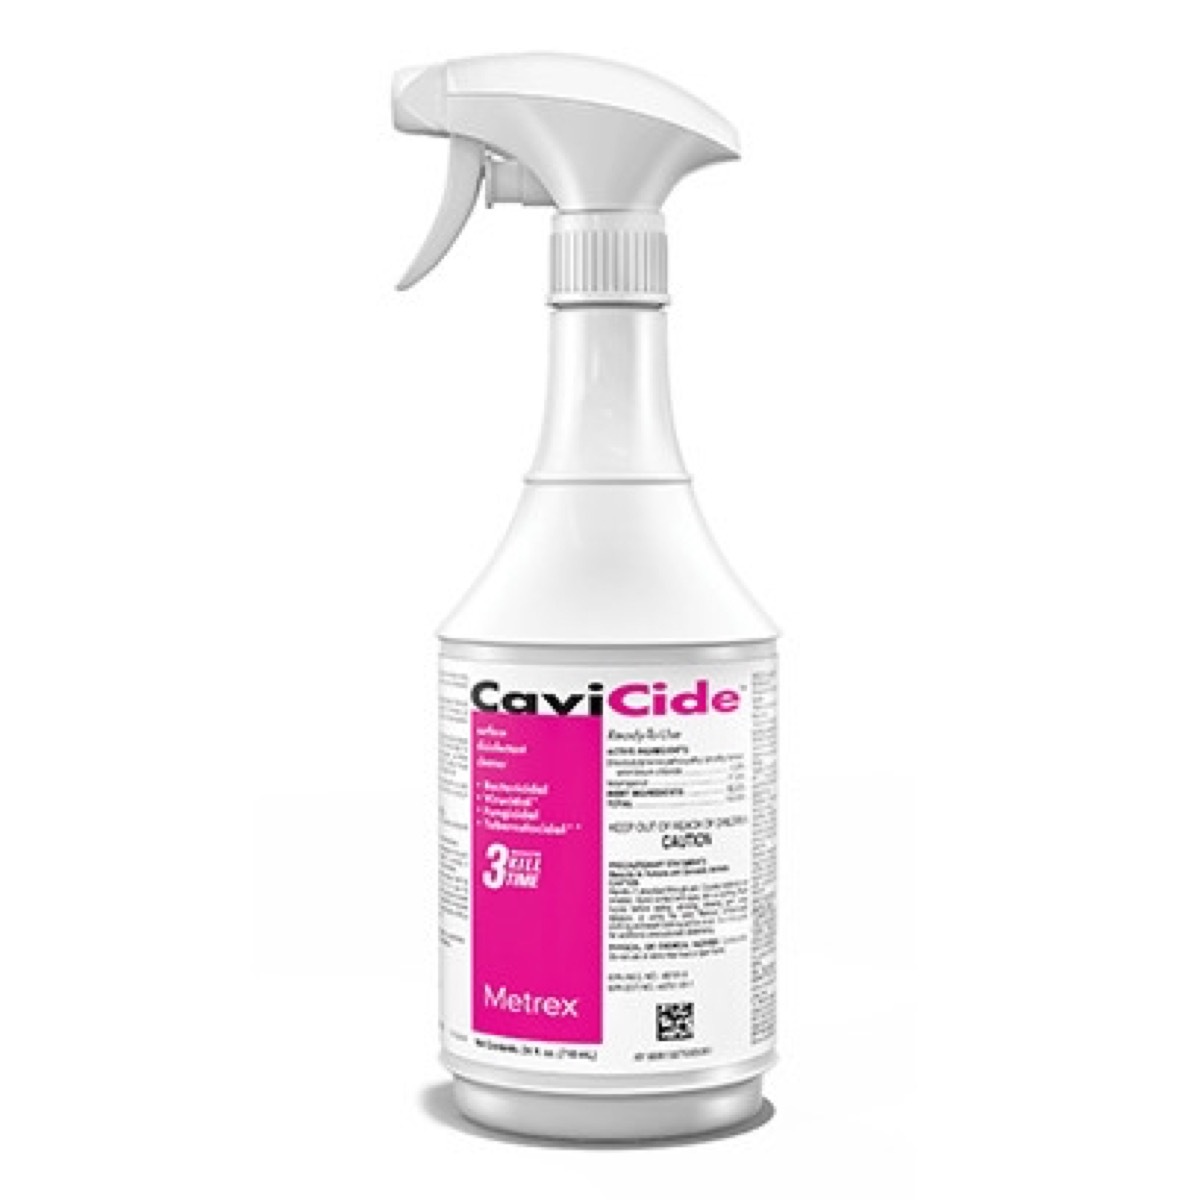 CaviCide disinfectant